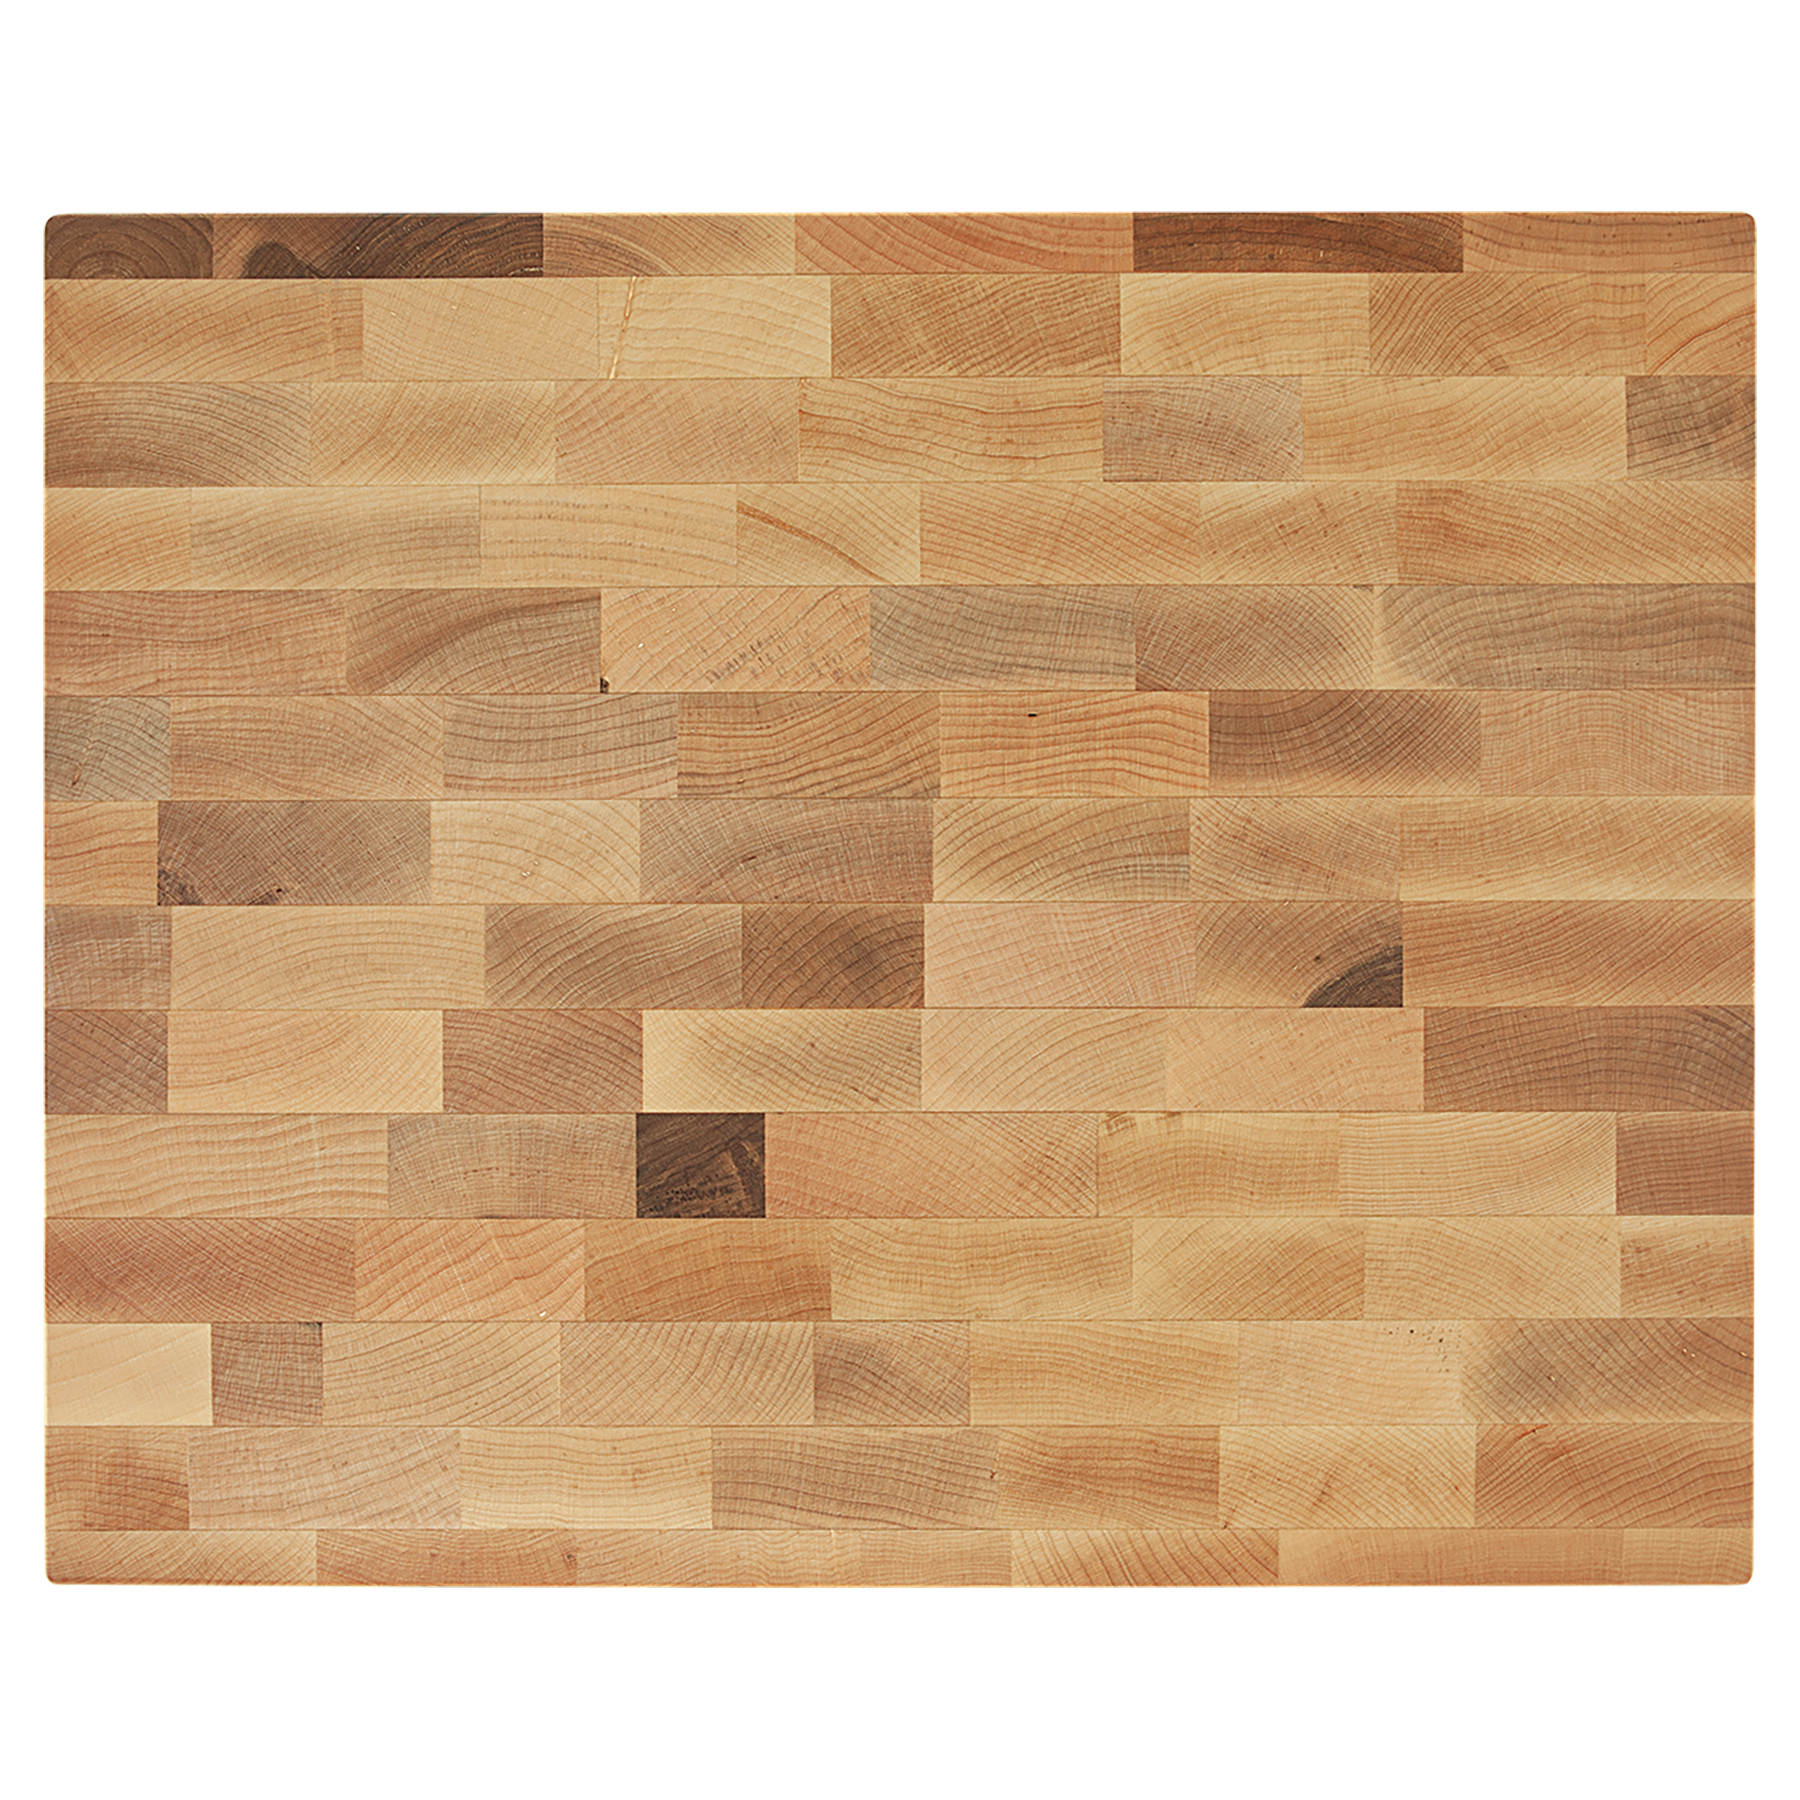 16" x 13" x 1 1/2" Maple Butcherblock Cutting Board